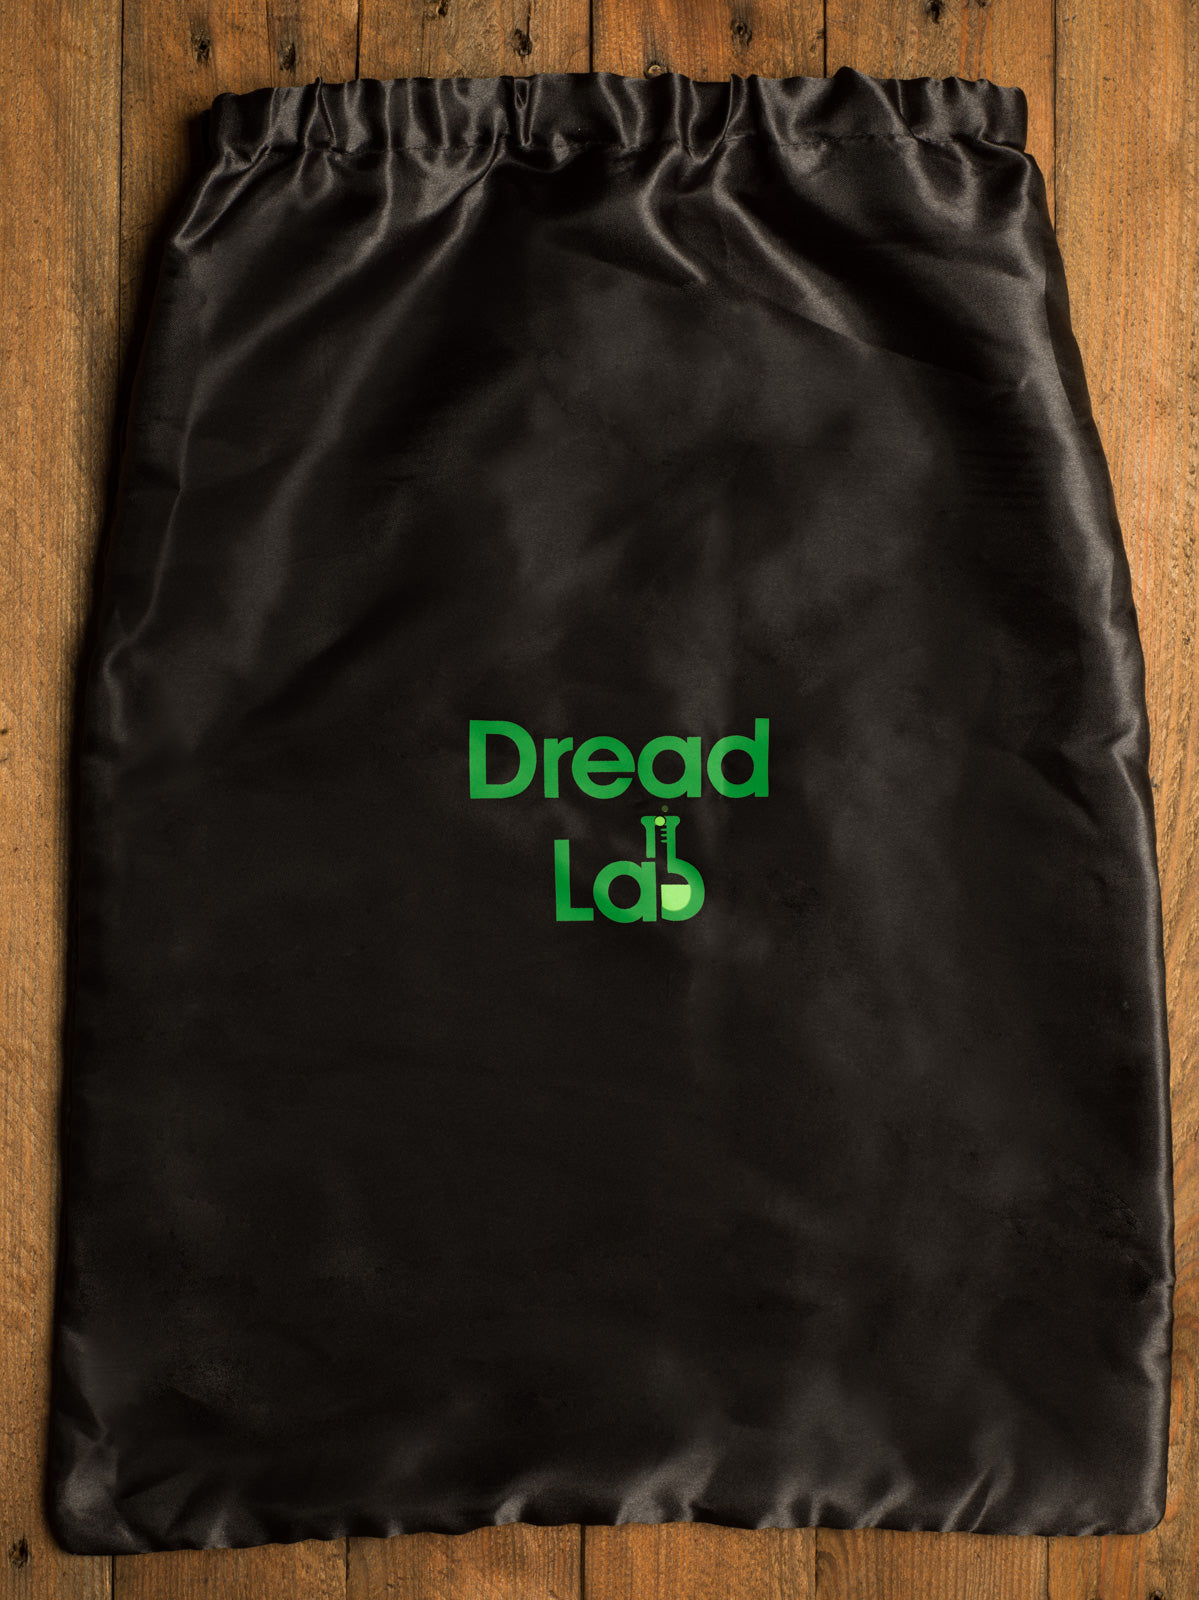 DreadLab - Dreadlocks Large Night Cap